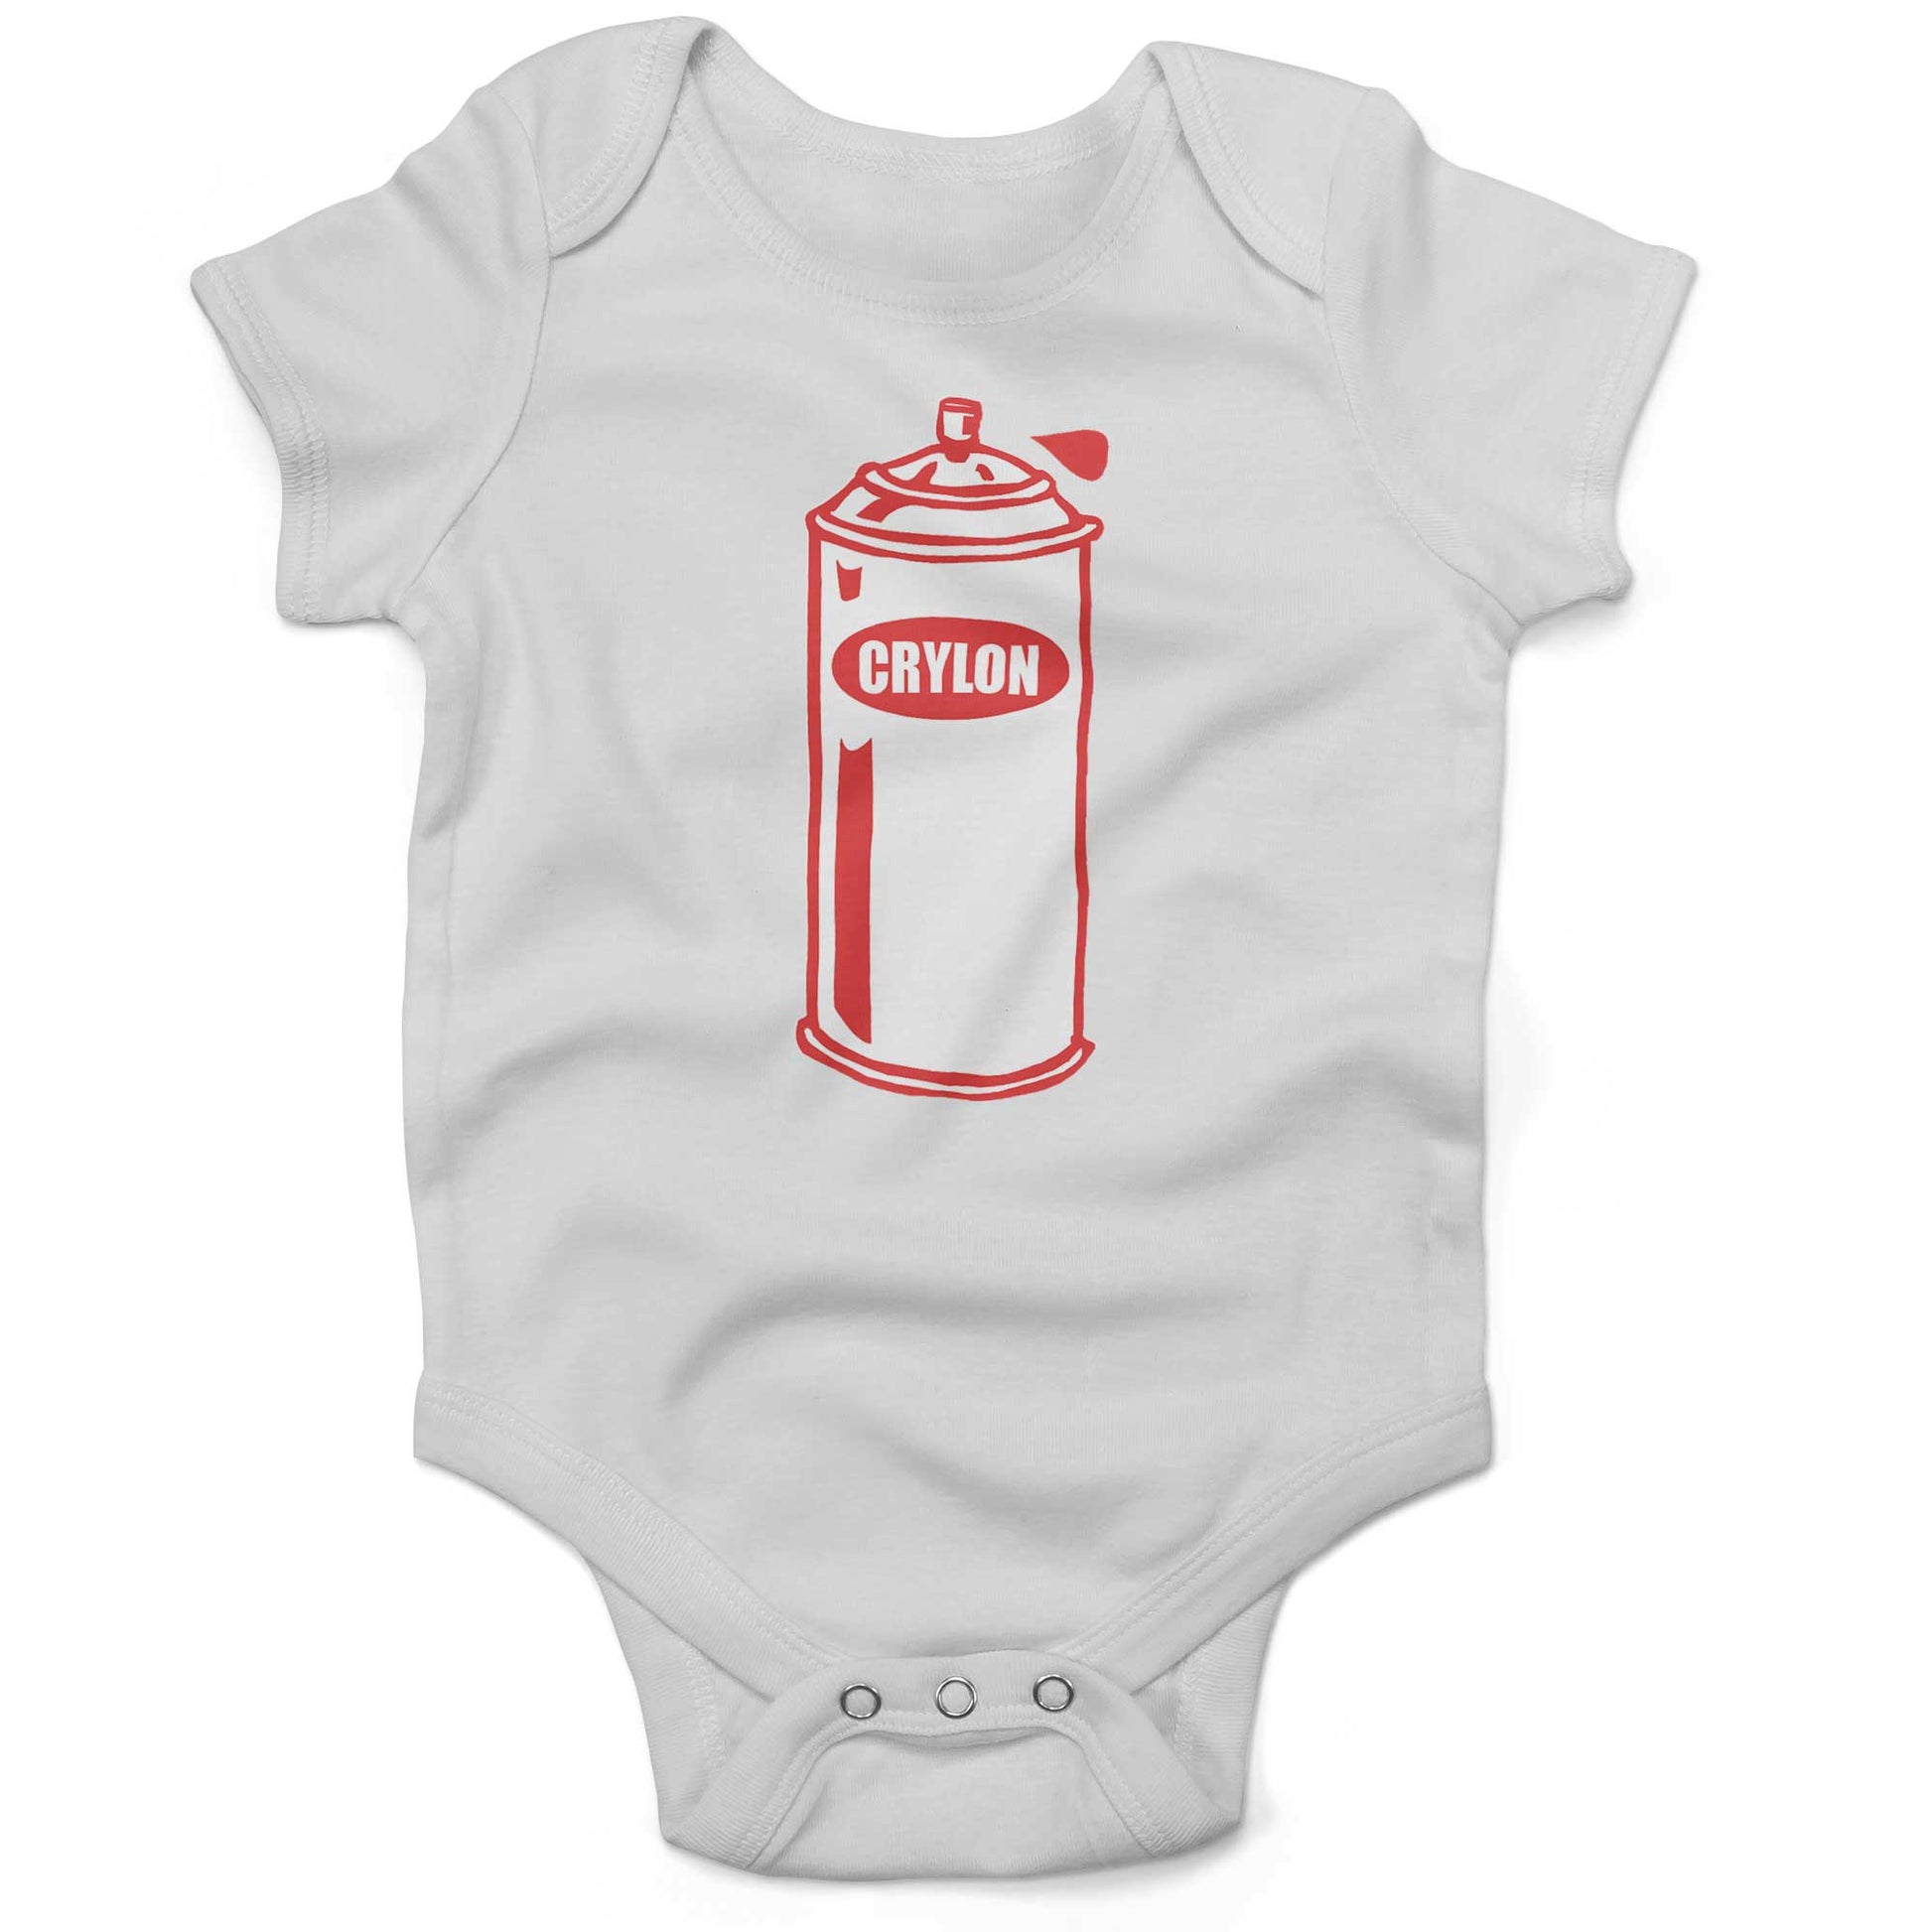 Crylon Cans Infant Bodysuit or Raglan Tee-White-3-6 months